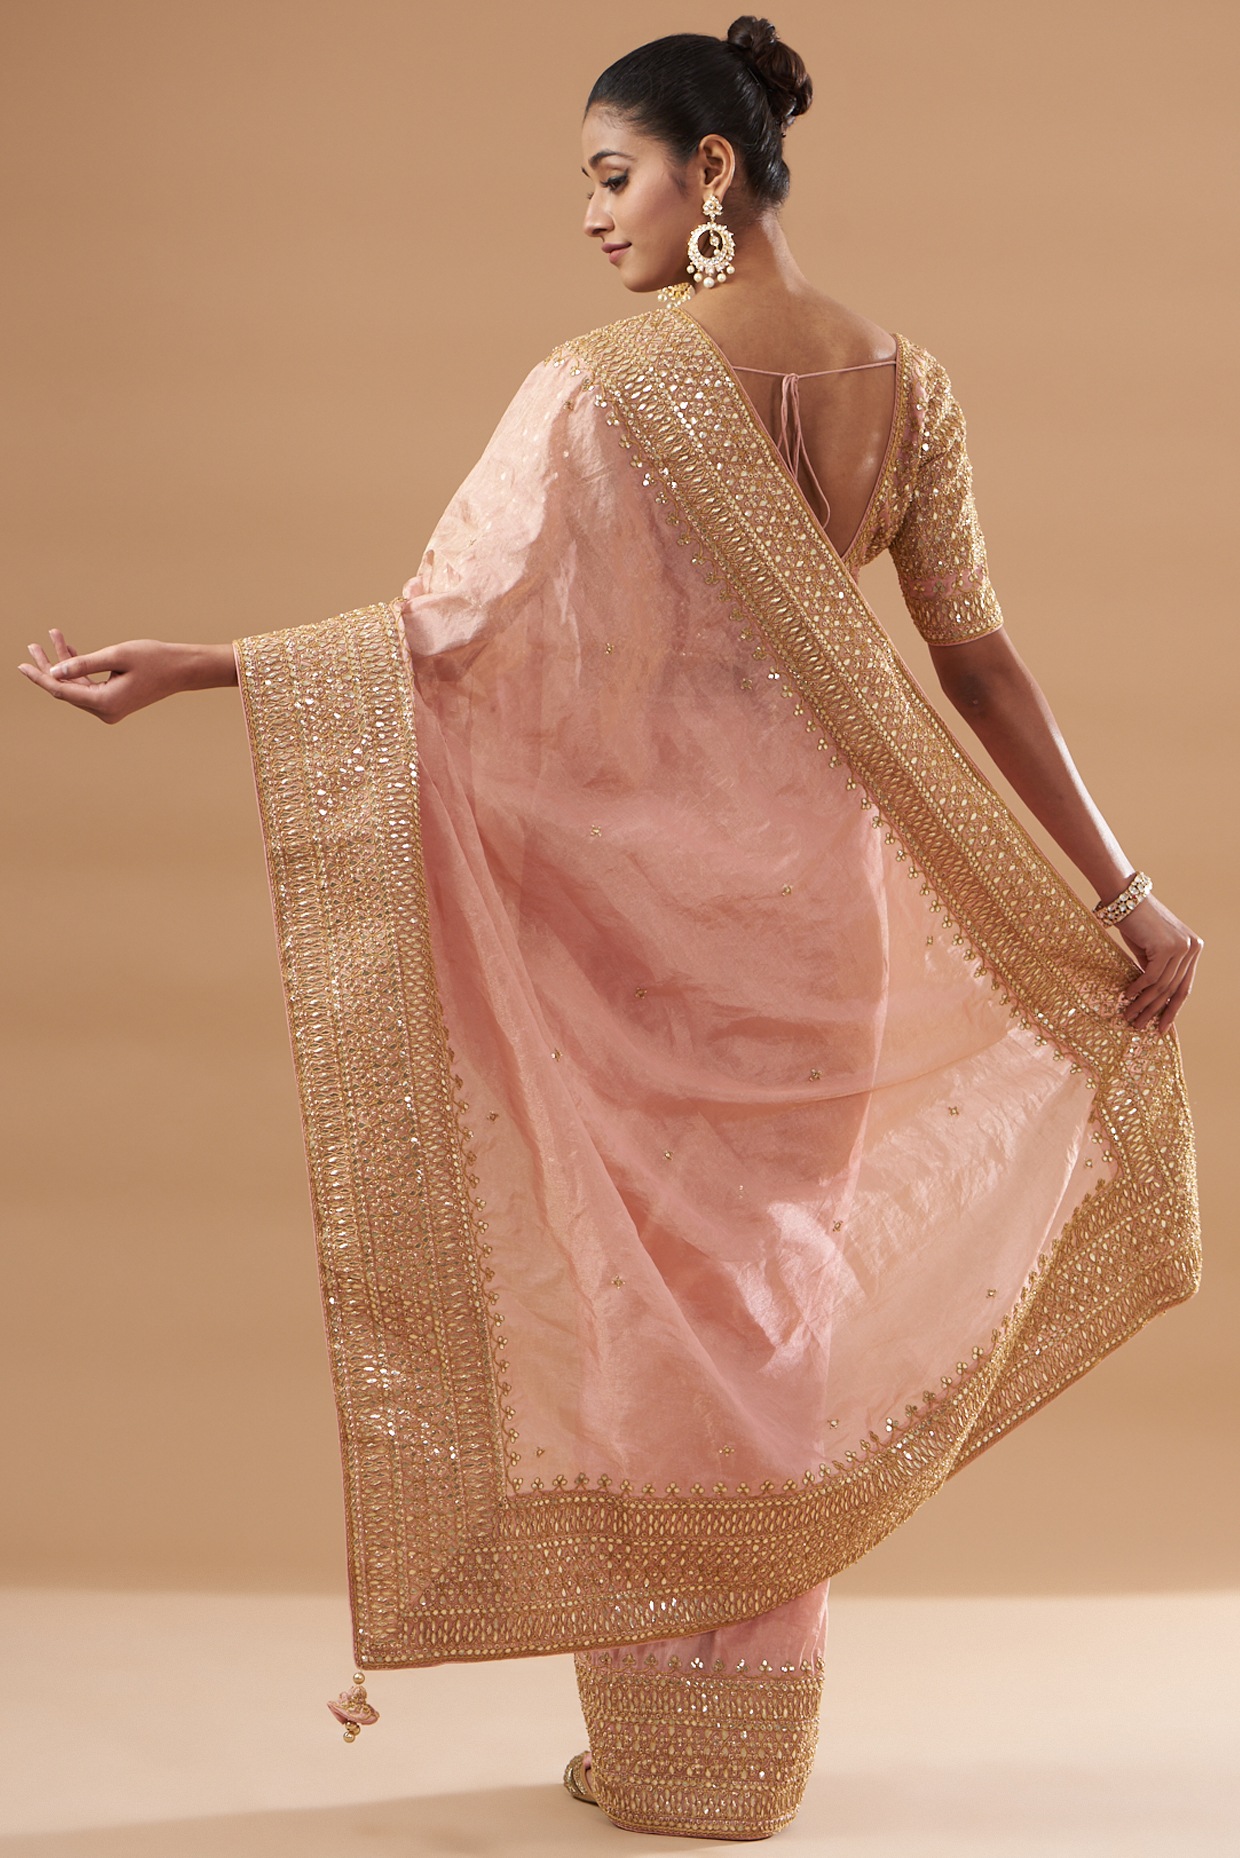 Peach Color Pure Georgette Sequin Saree - Tirja Collection Yf#22930,  सिक्विन्स वर्क साड़ी - Ozone Shield, Mumbai | ID: 2849821723433